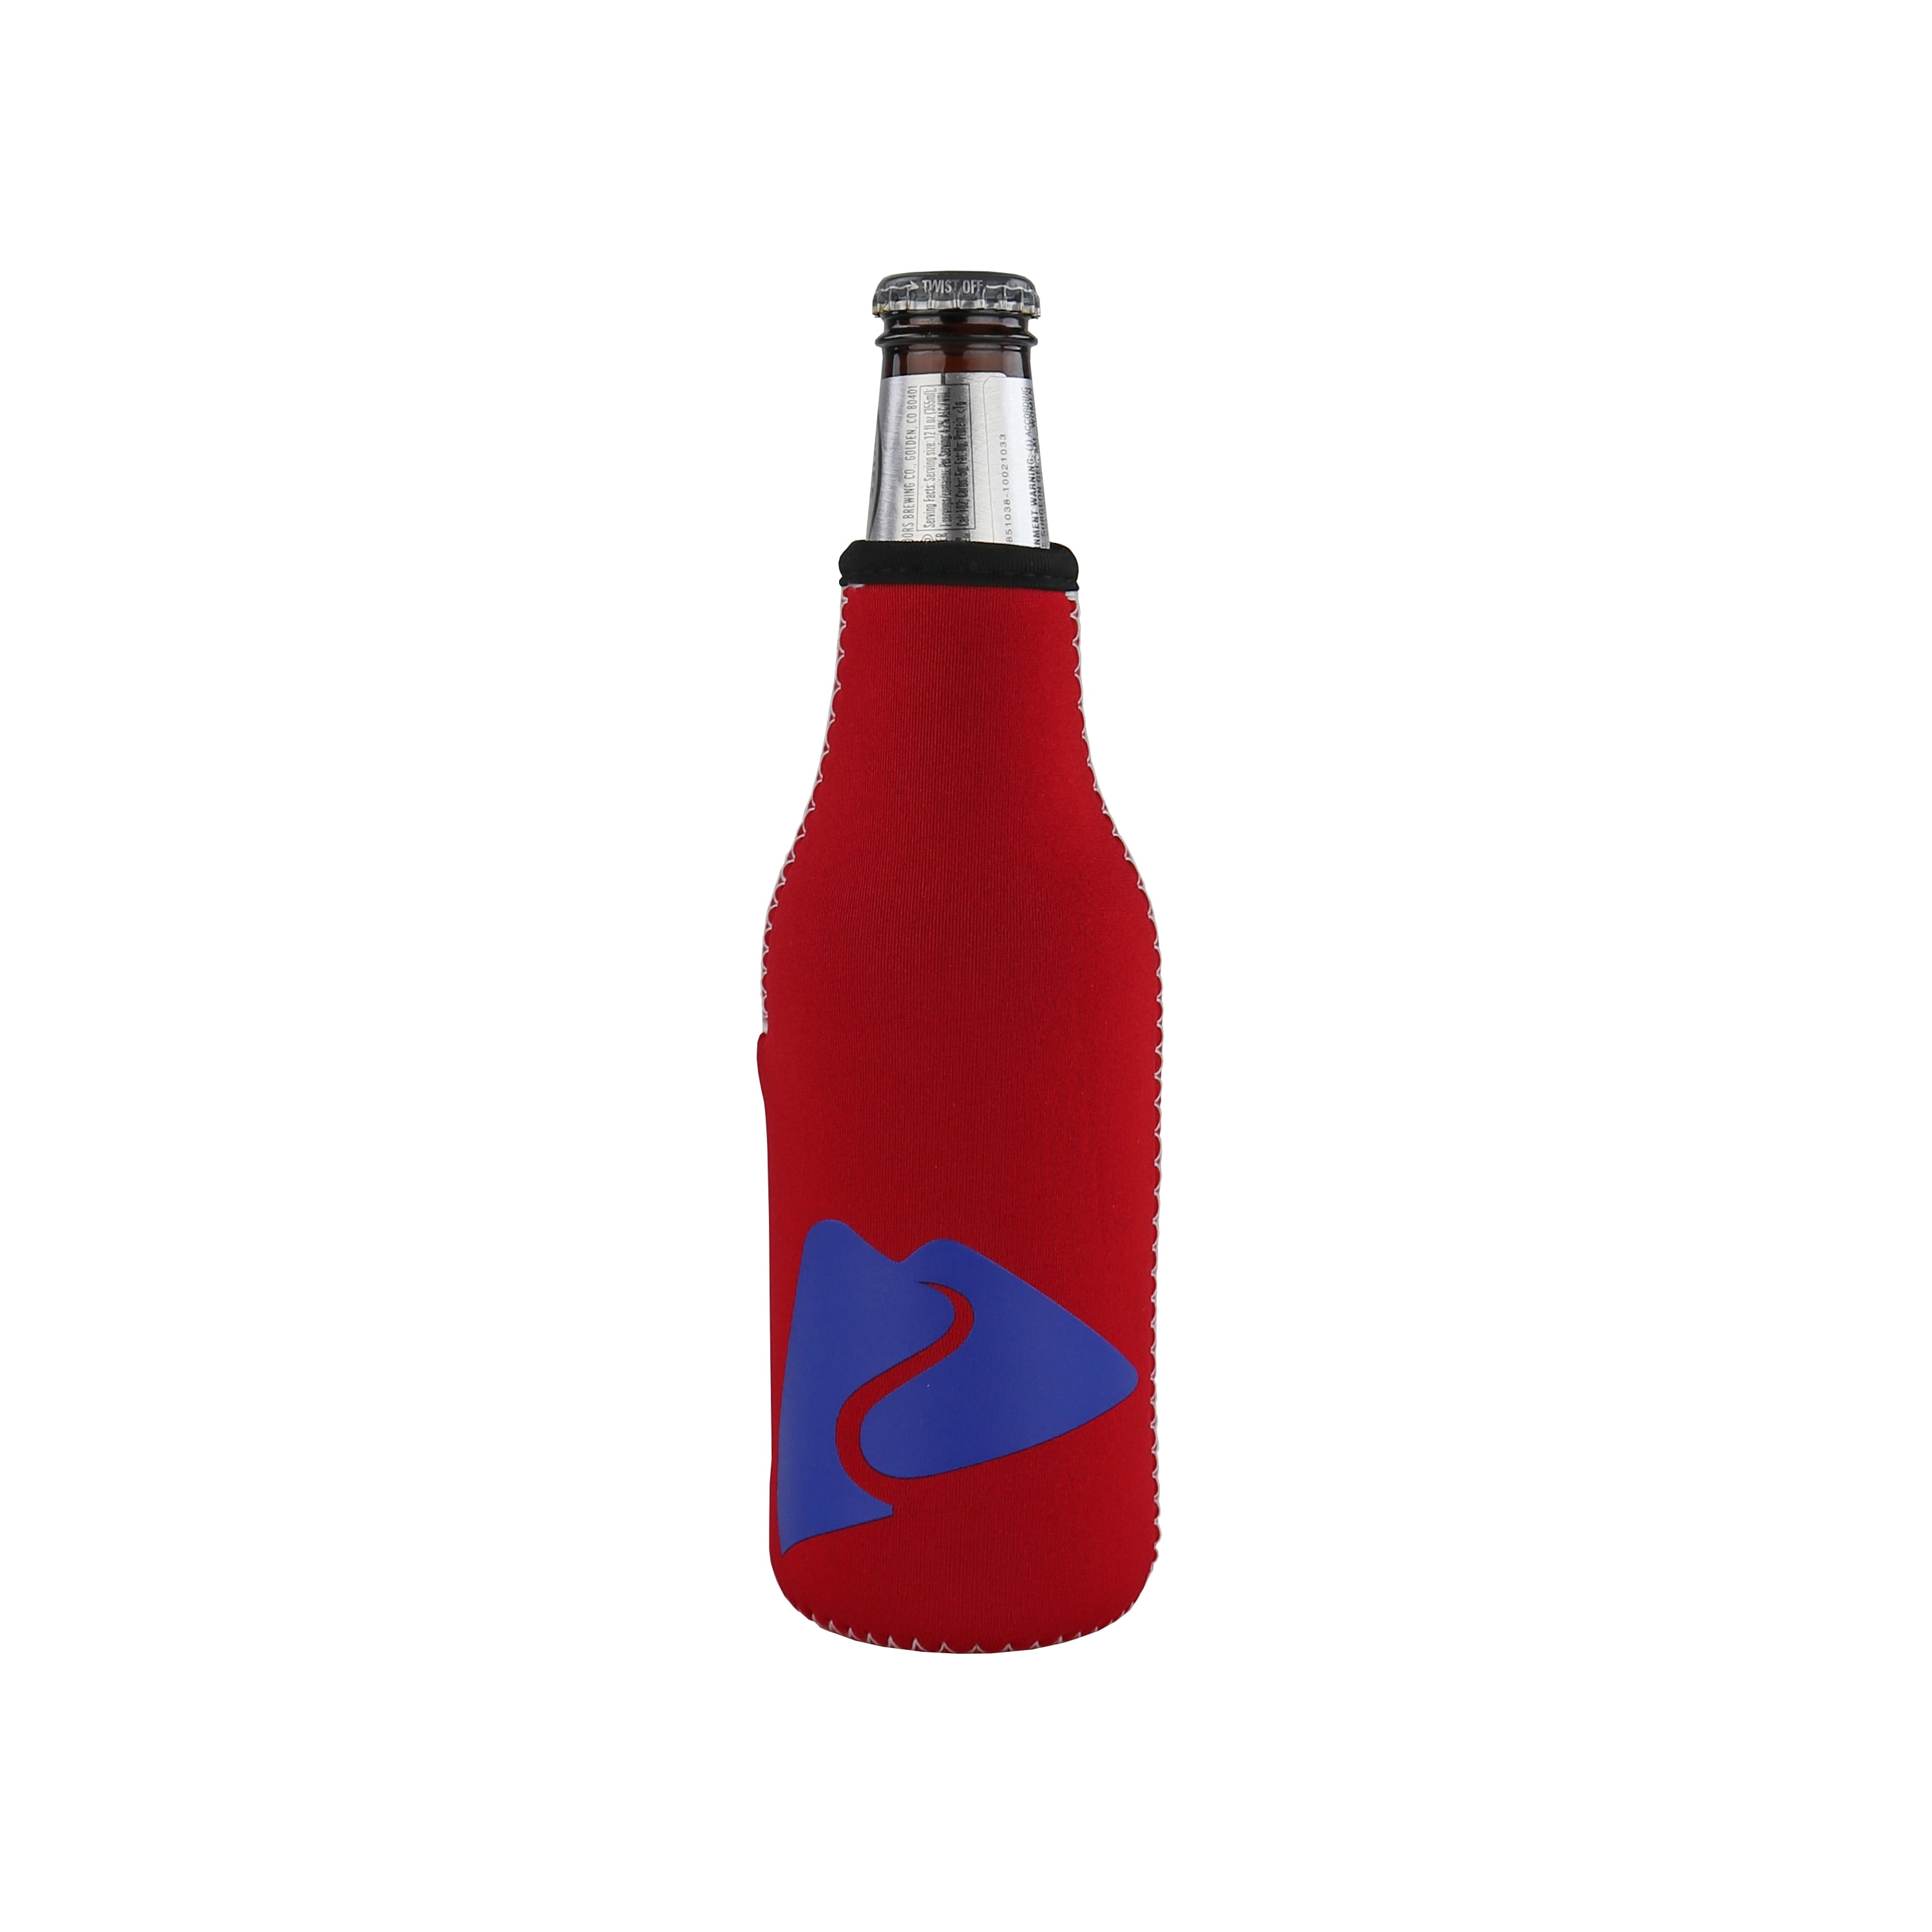 HRLORKC 10 Pack Neoprene Water Bottle Sleeve 12 oz - 18 oz Bottle Cozy  Insulated Glass Water Bottle Cover (Multi-Color)